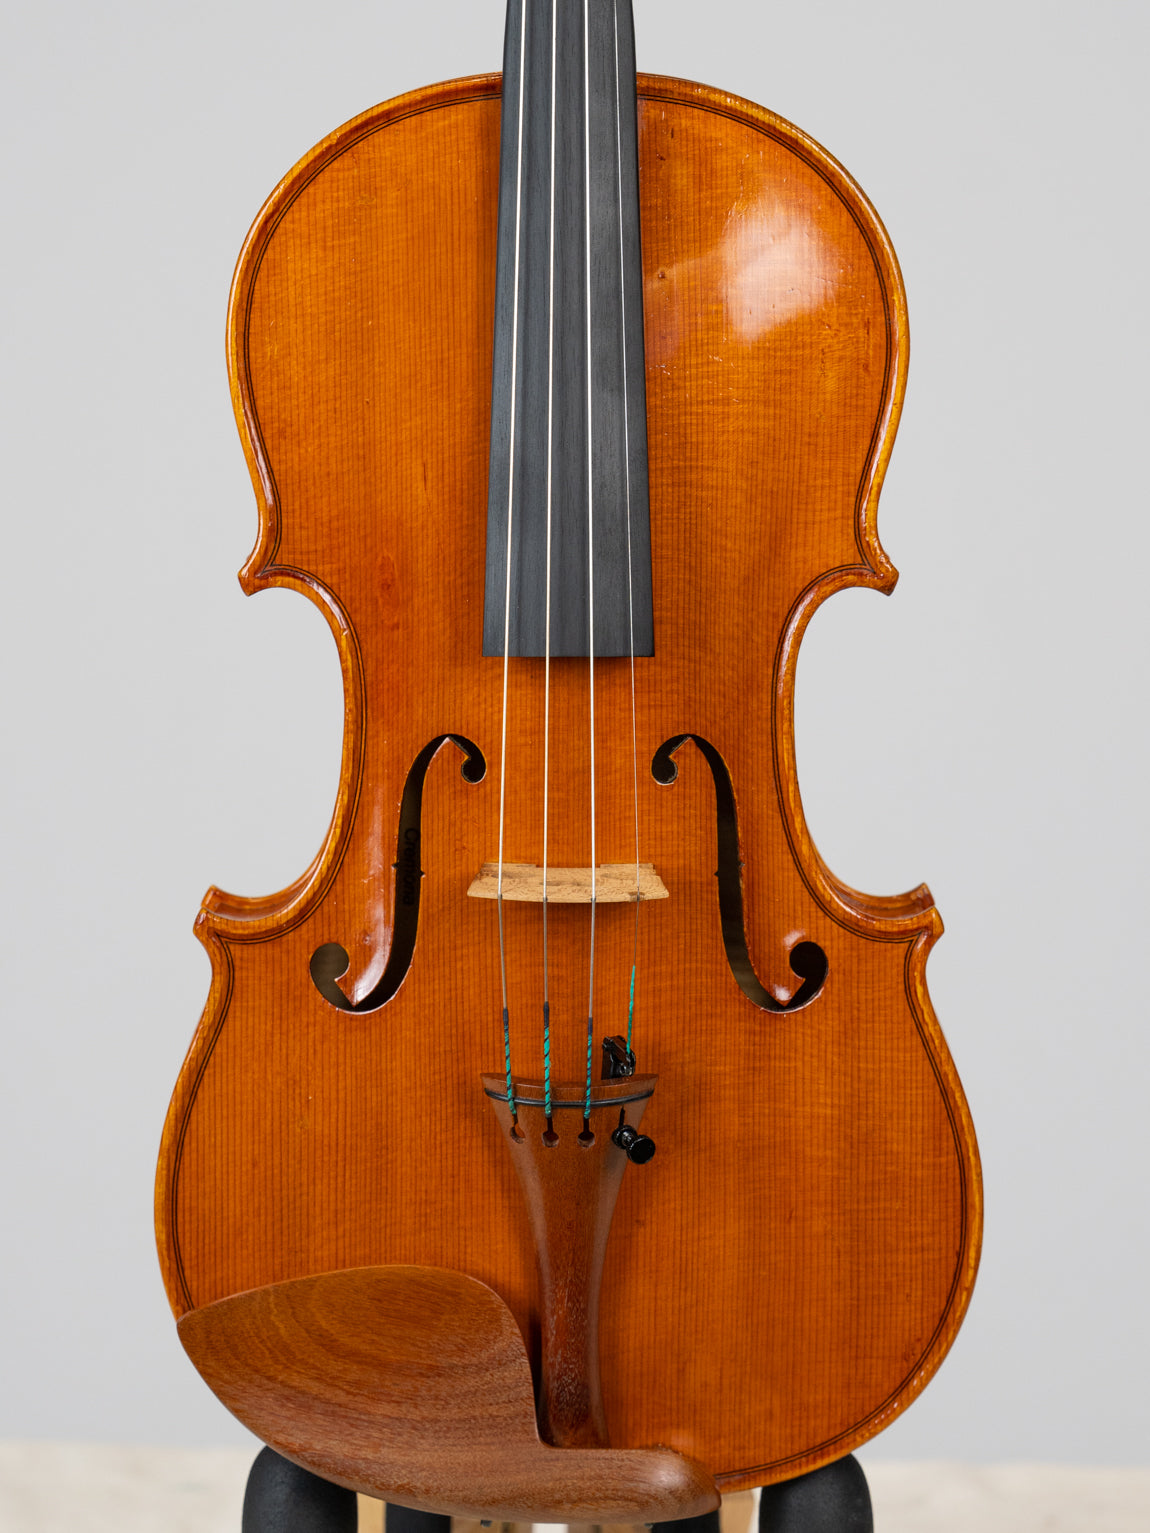 A. Stradivari 1715 violin  Antique-style violin  By Roberto Cavagnoli